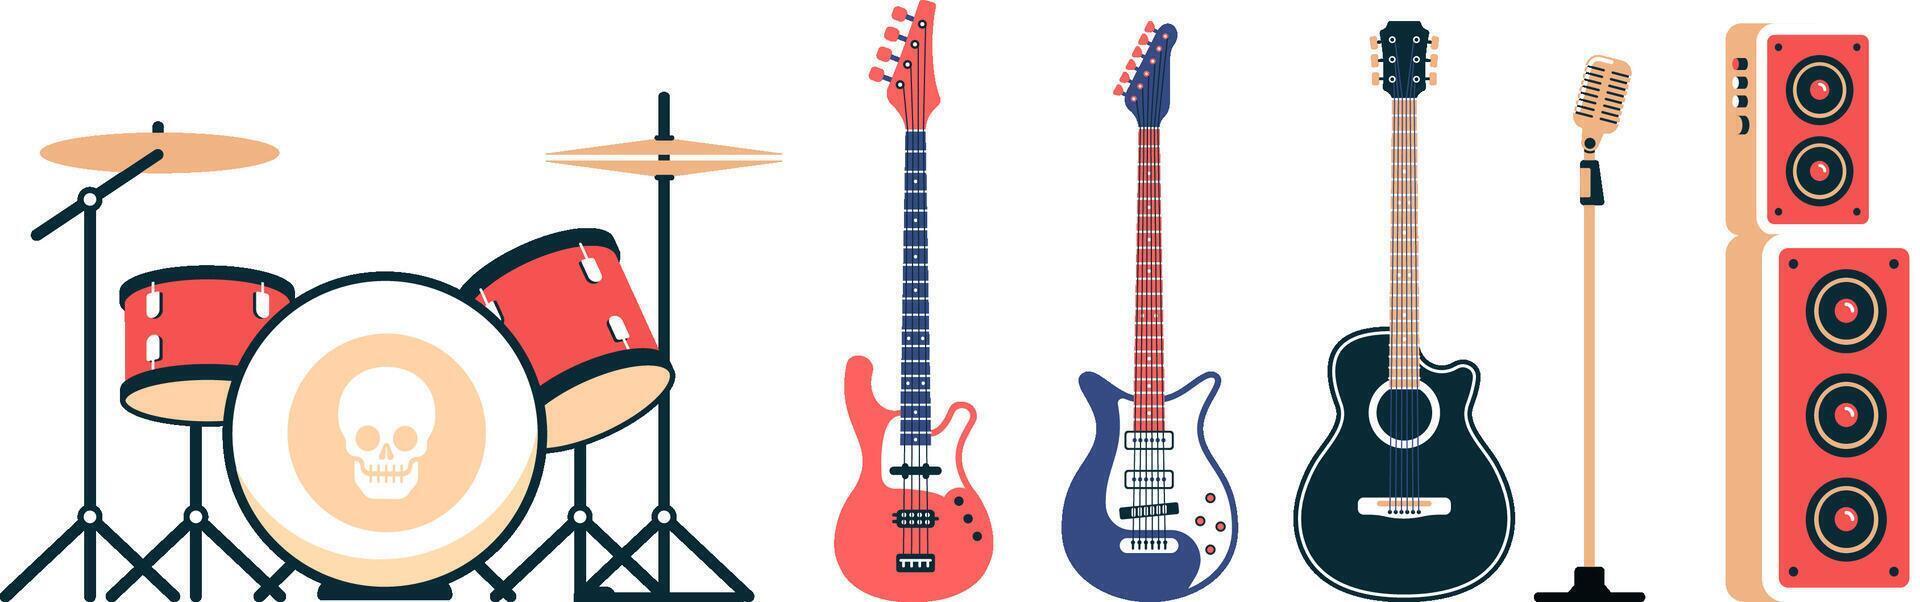 Rock band instruments set vector